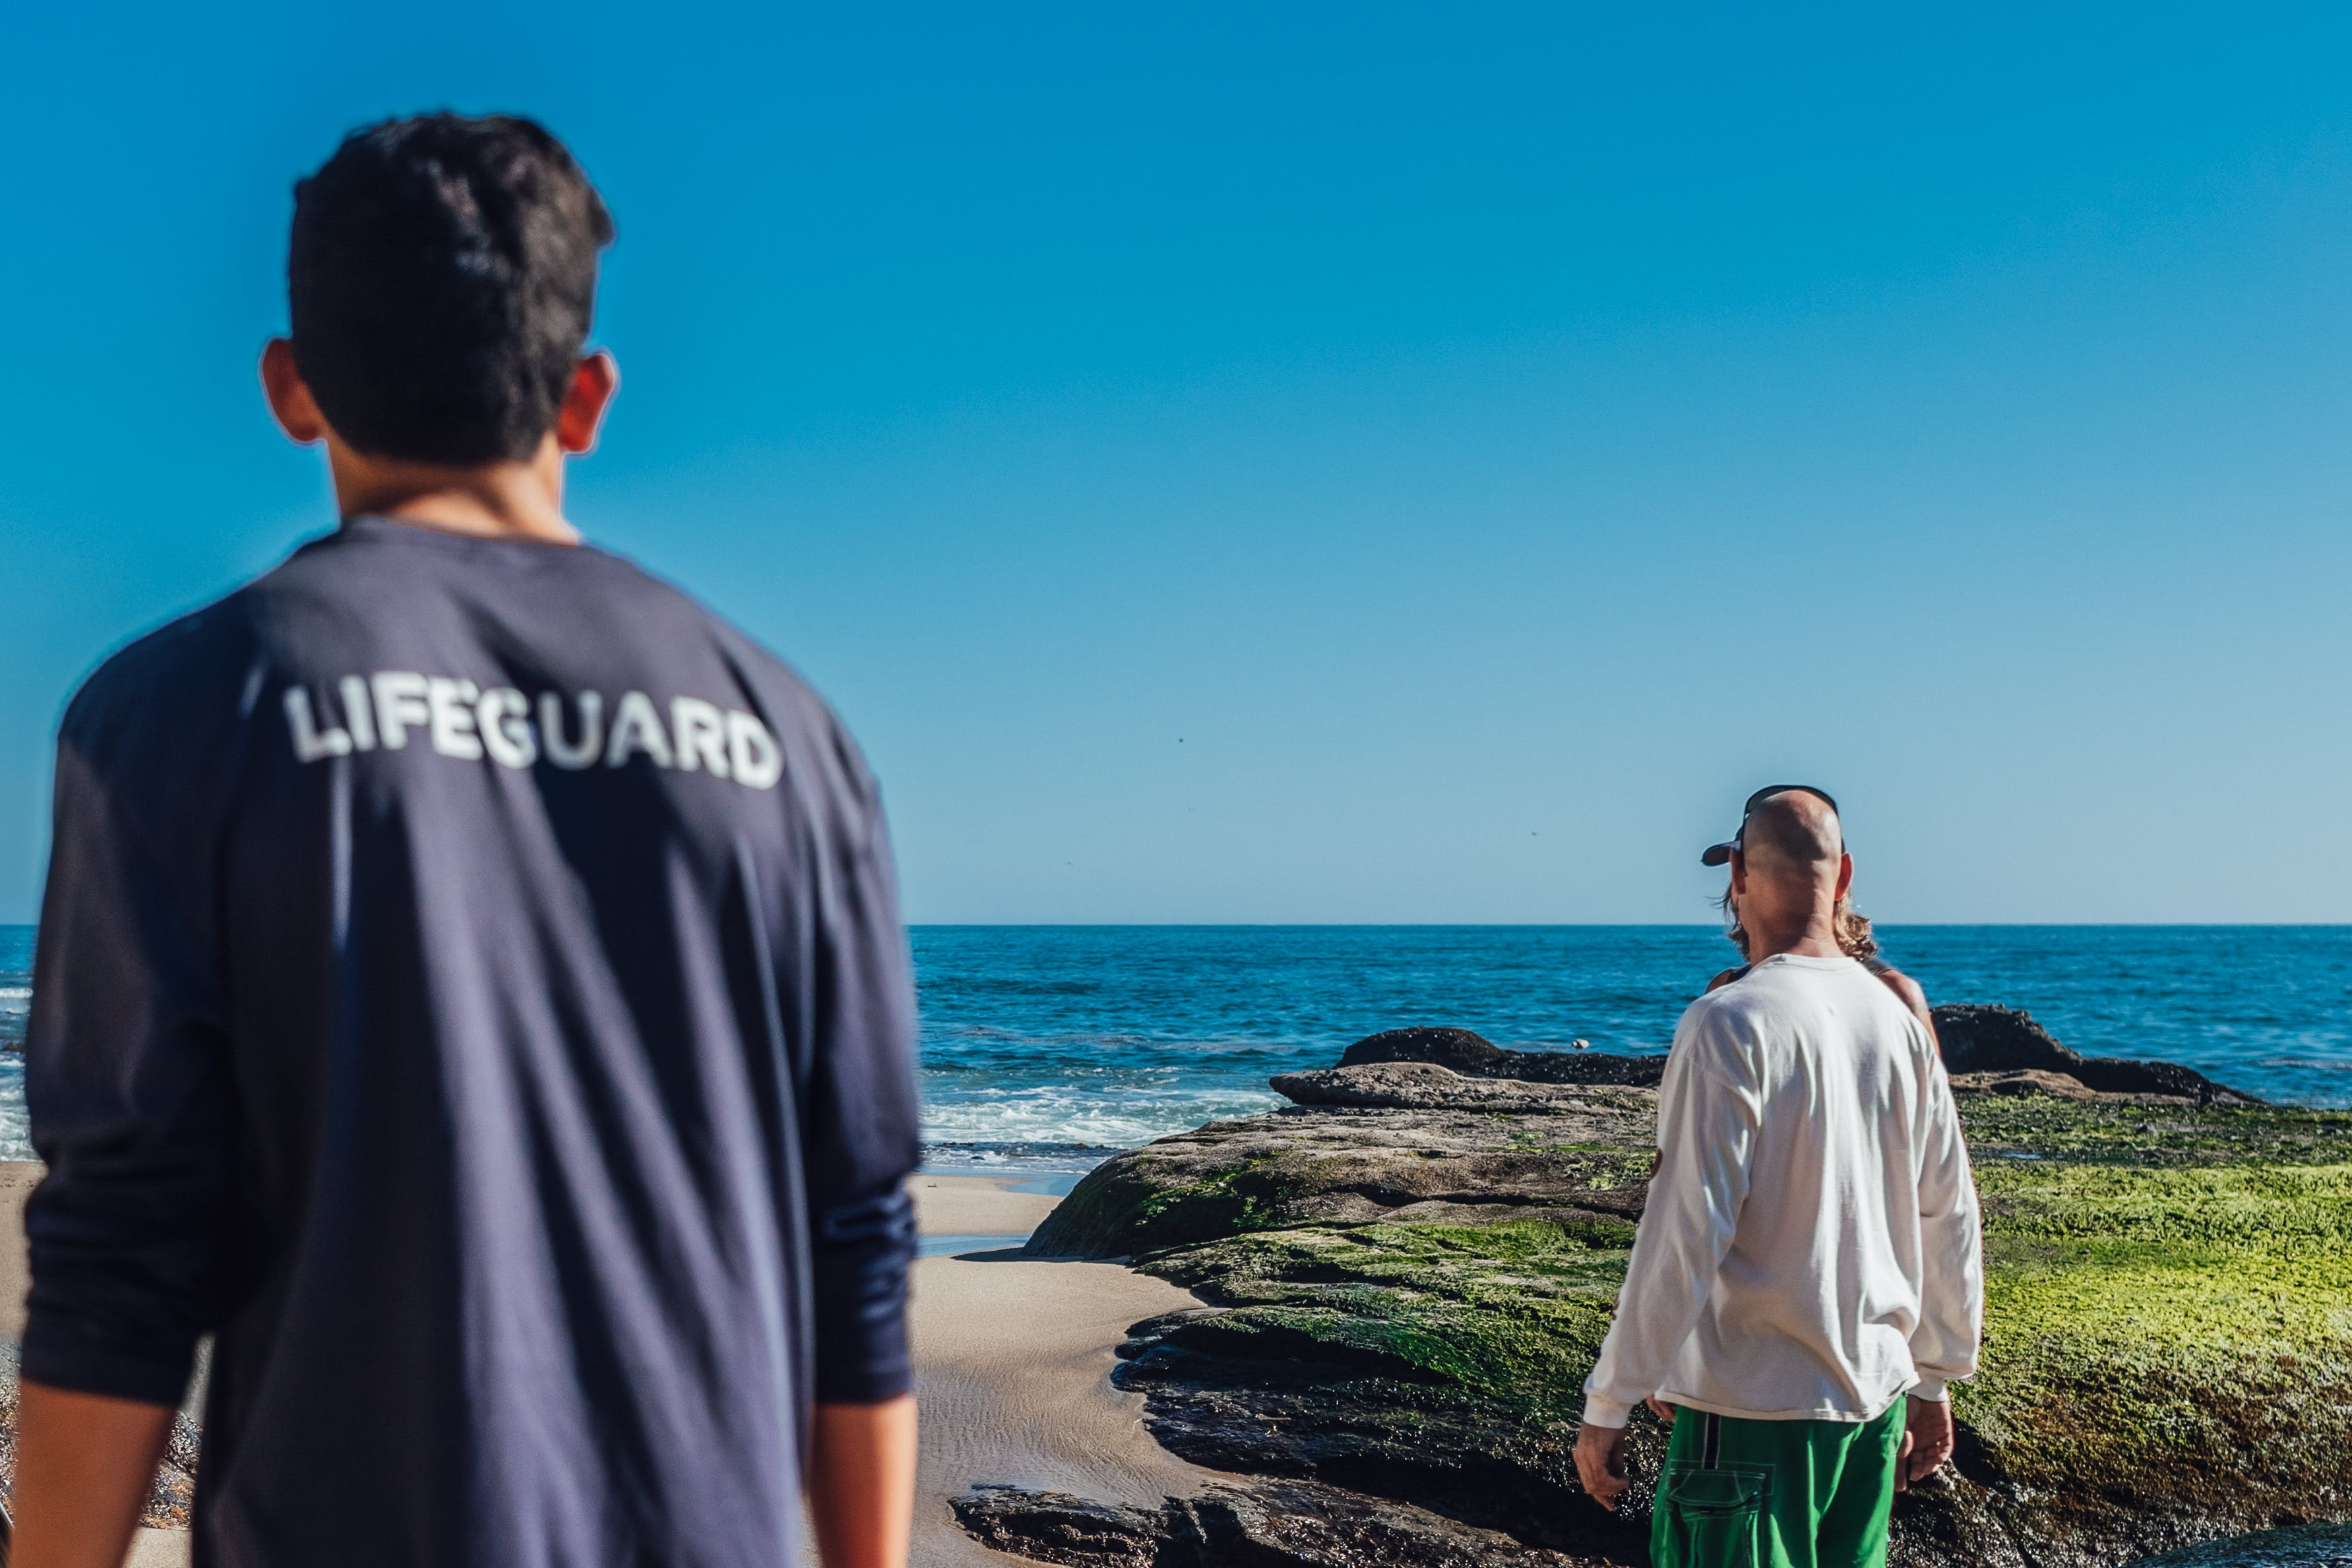 A lifeguard standing near the ocean. | Source: Pexels